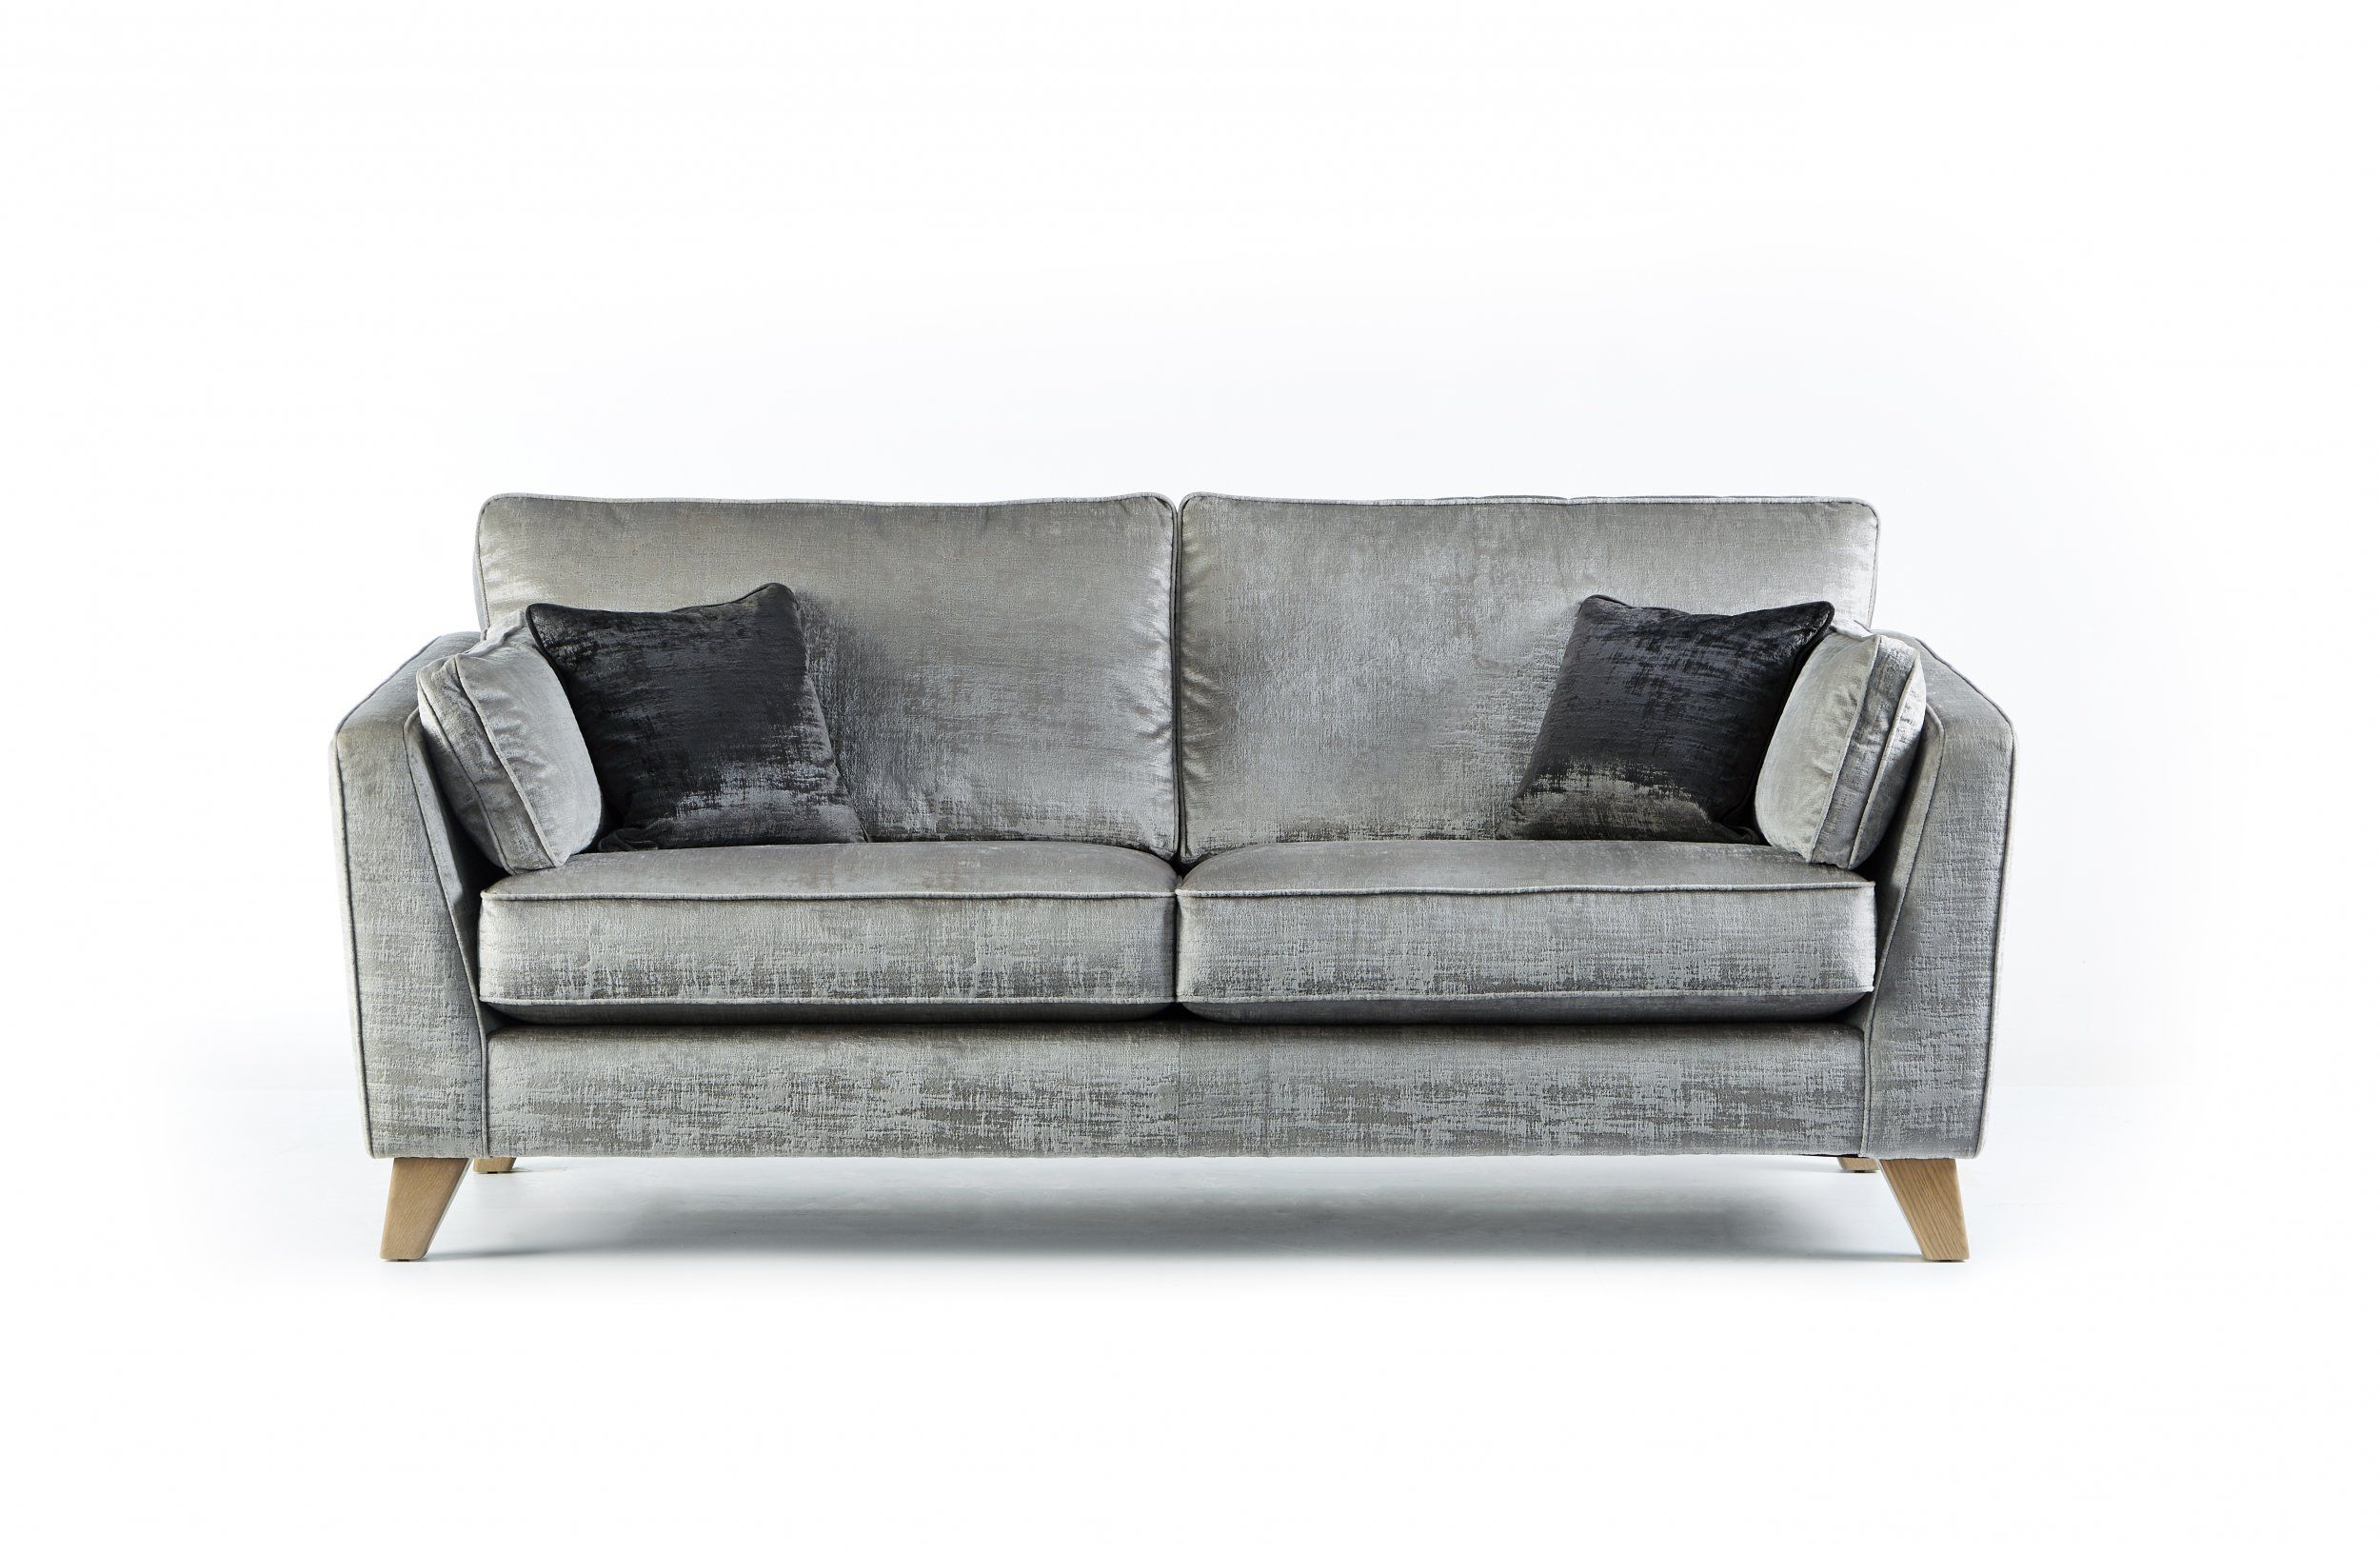 Hampton 3 Seater Sofa | Eyres Furniture With Regard To Hamptons Sofas (View 9 of 15)